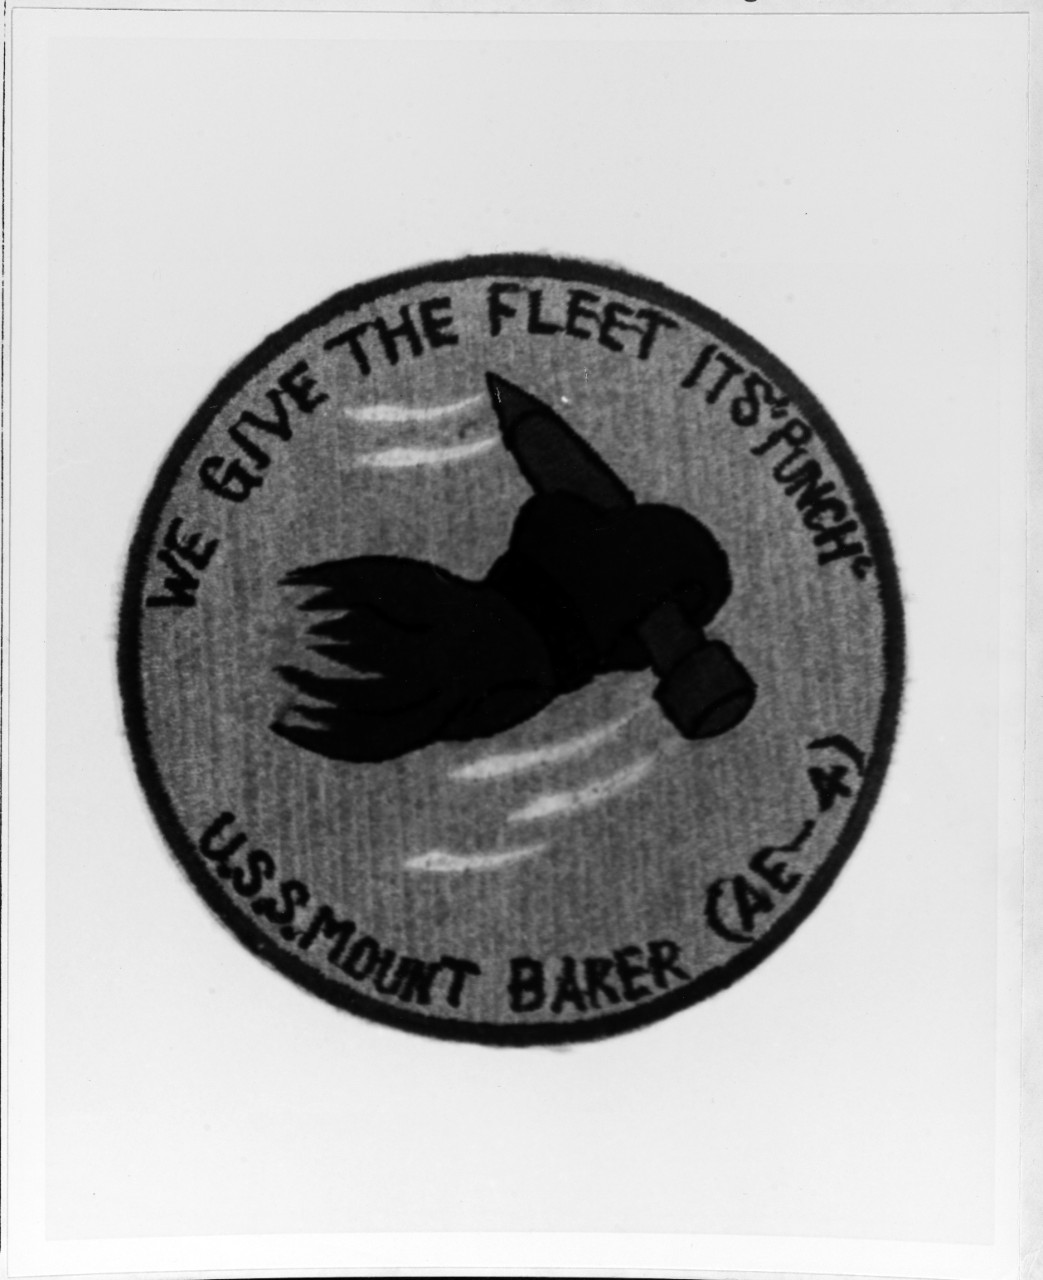 Insignia:  USS MOUNT BAKER (AE-4)